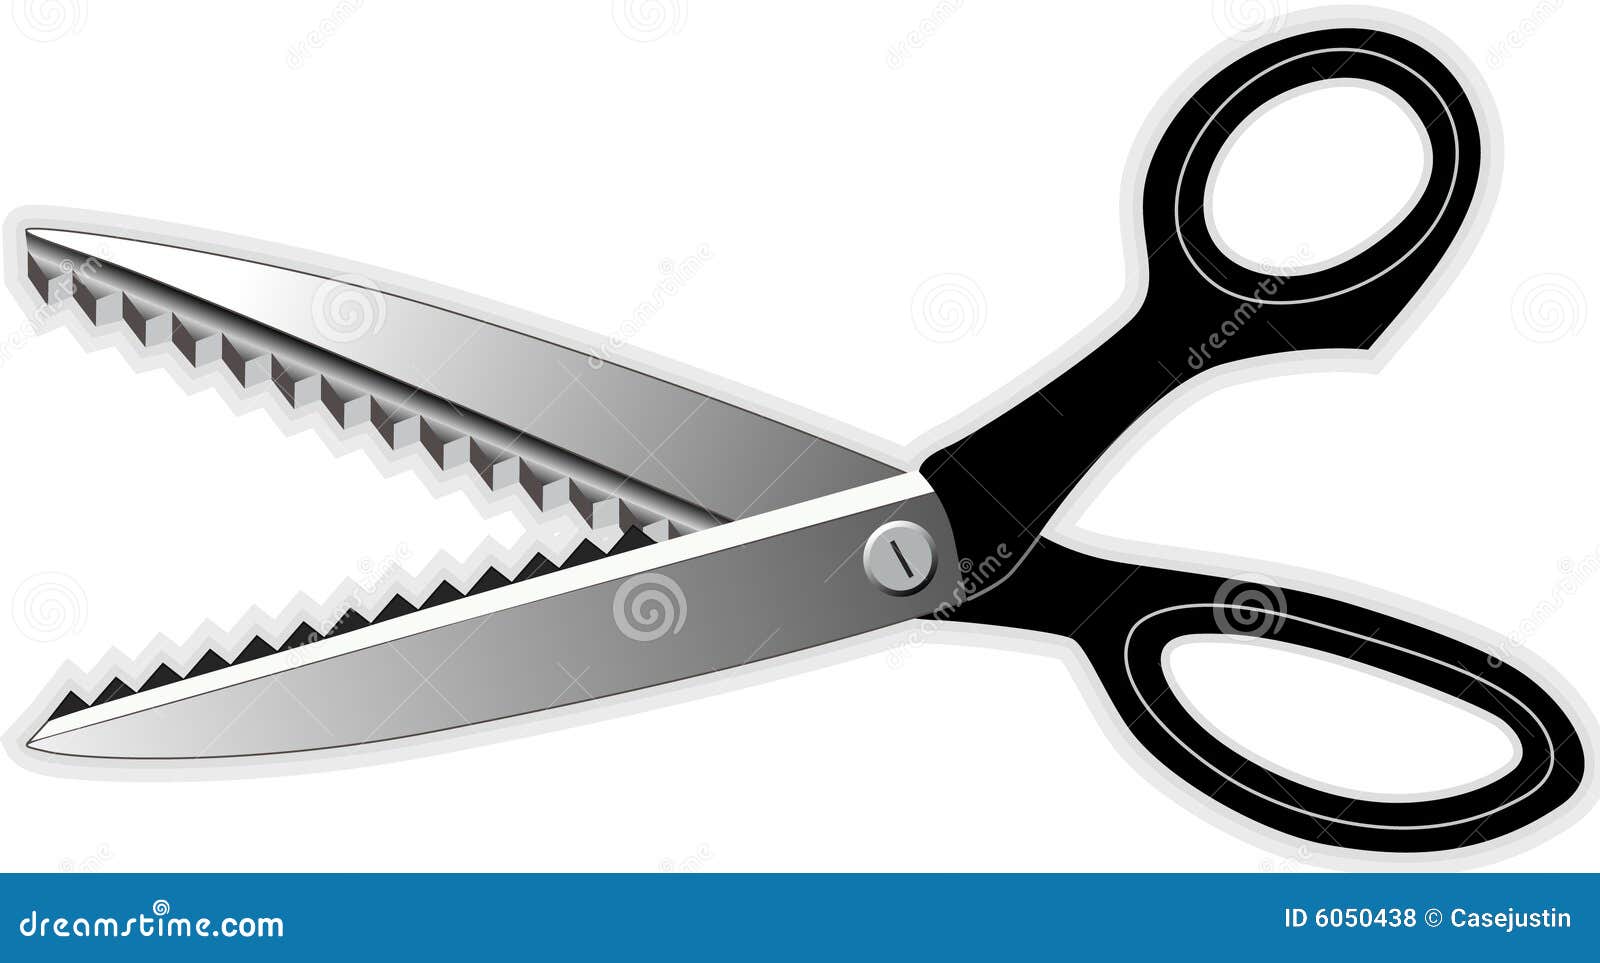 pinking shears (scissors)